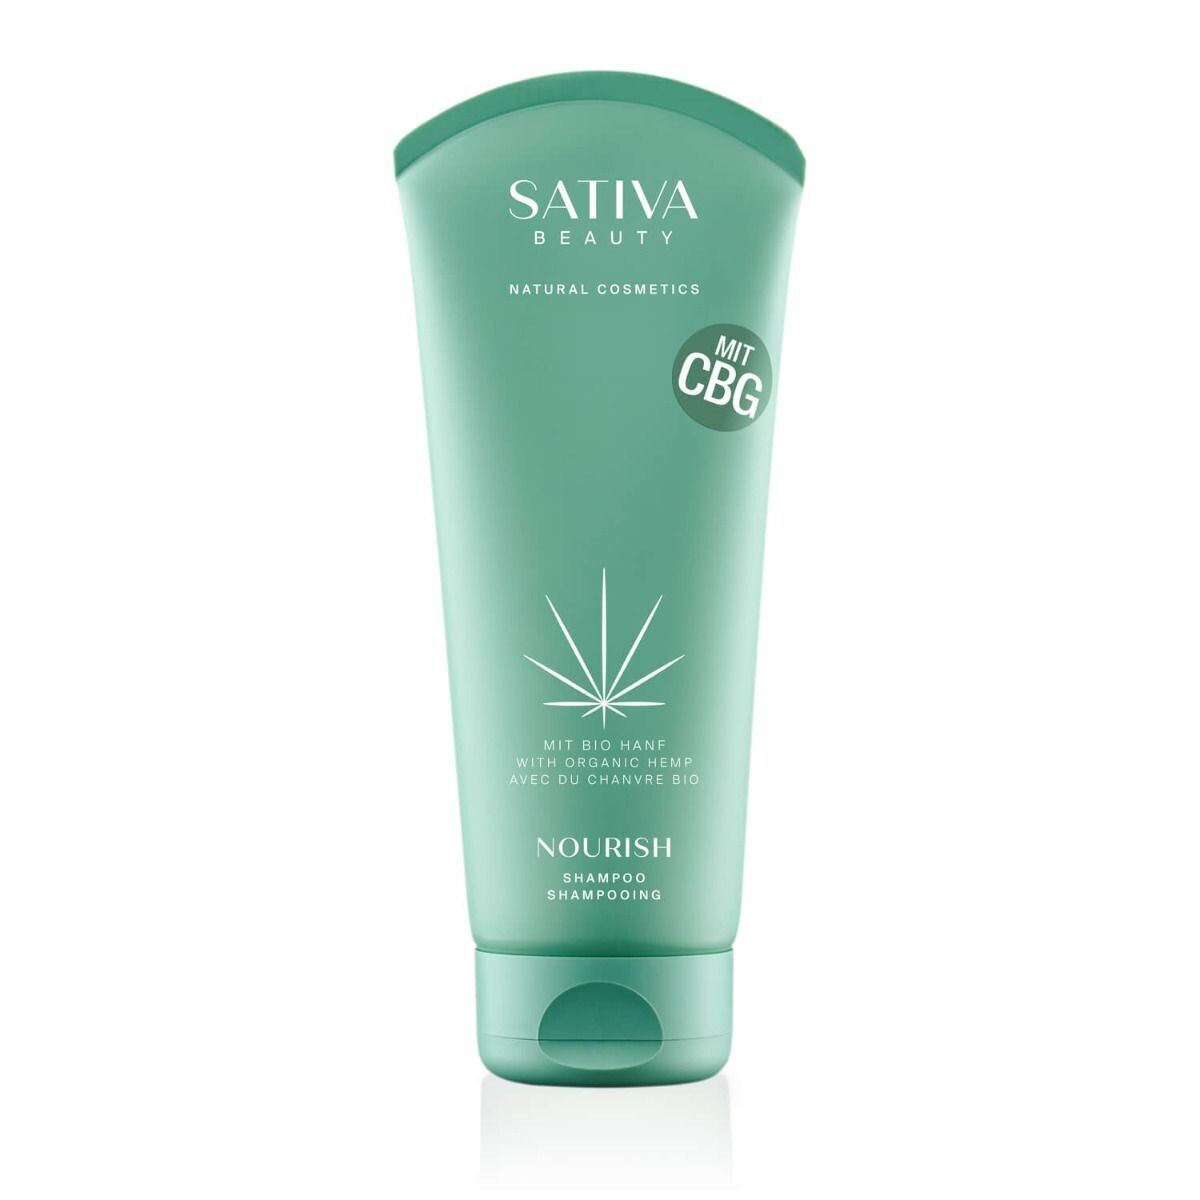 Sativa Beauty NOURISCH Shampoo, 200ml